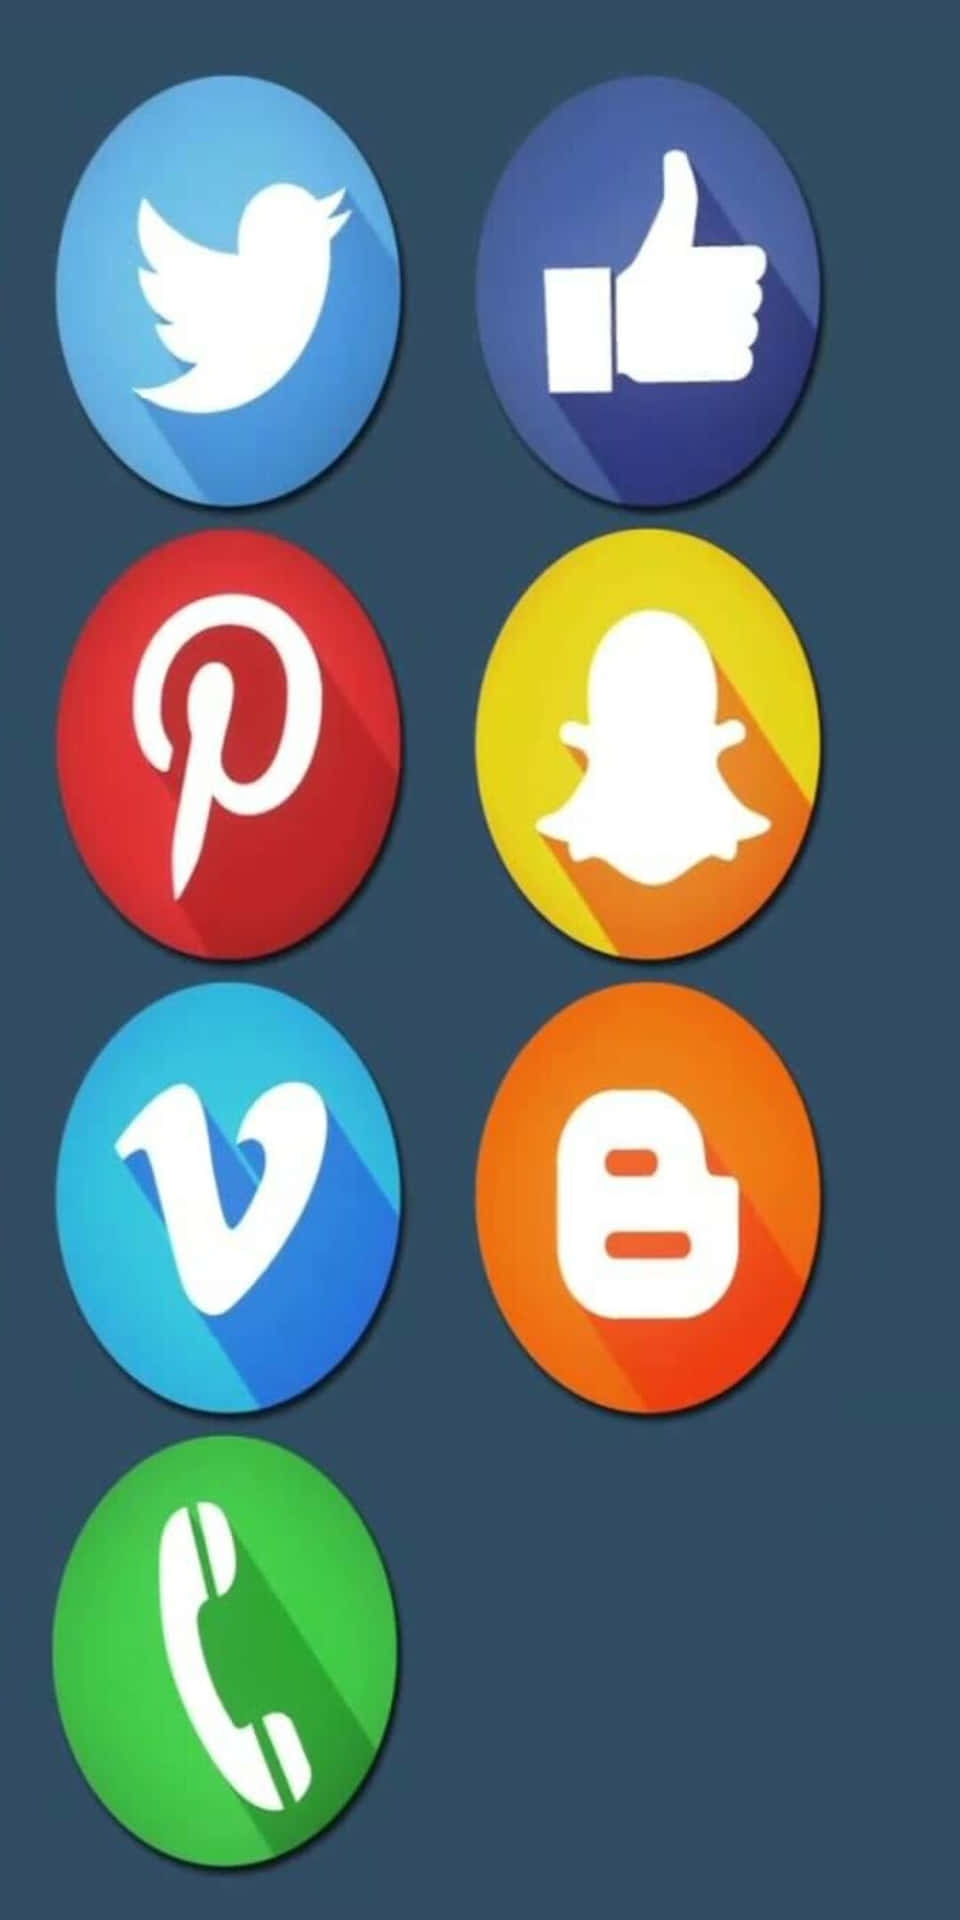 Pixel3 Bakgrund Med Sju Sociala Medie-logotyper.